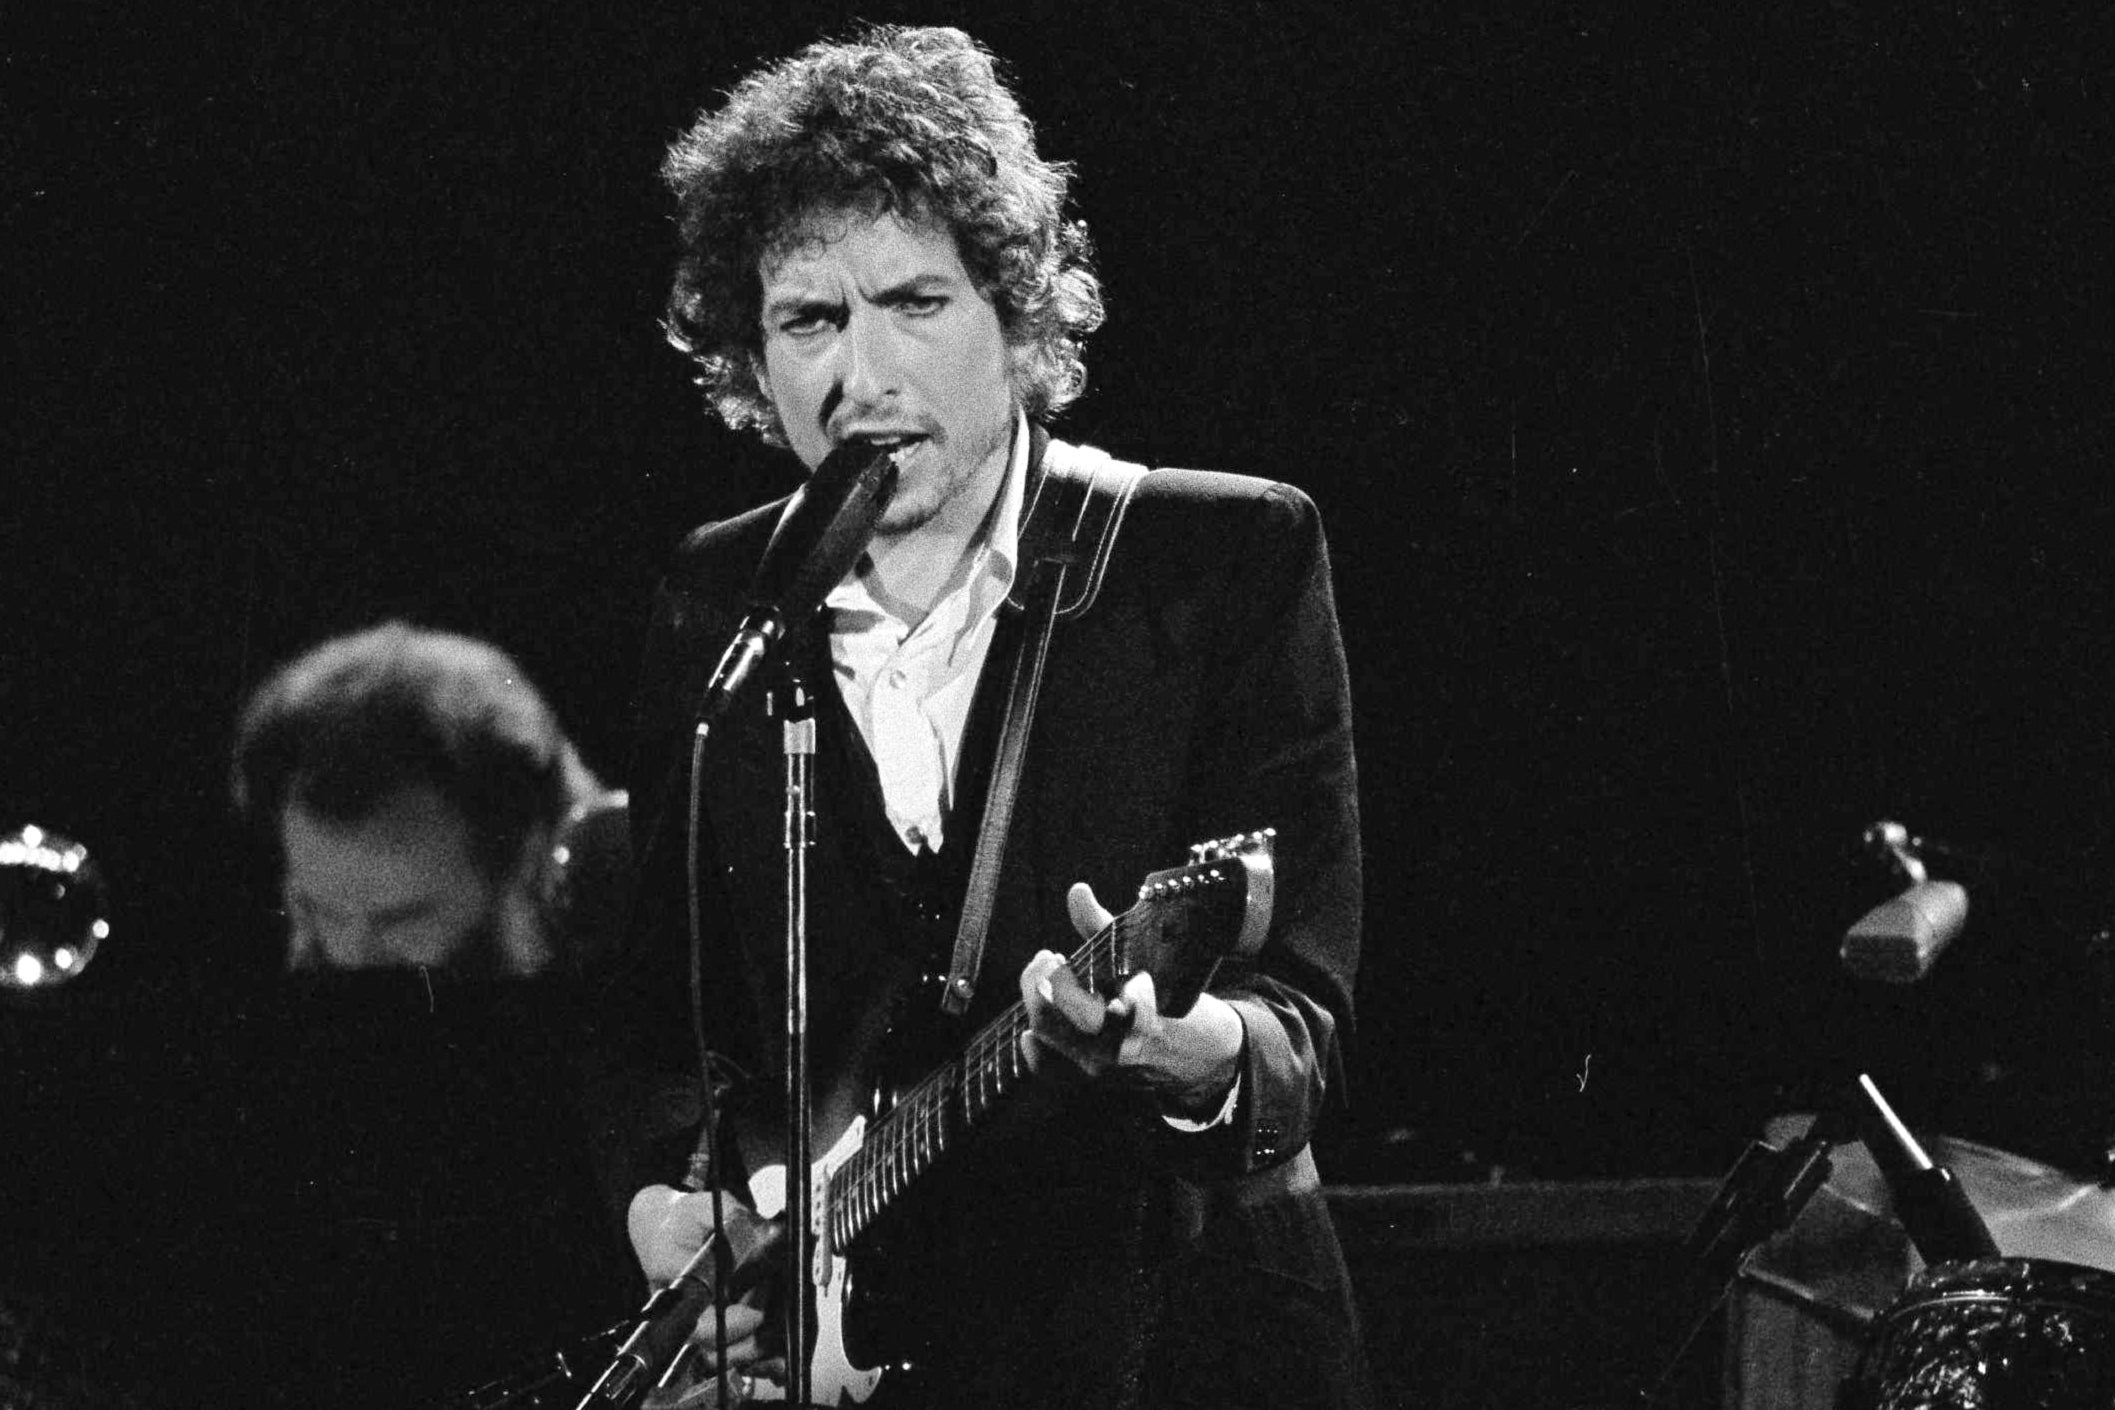 Bob Dylan turns 80 this month